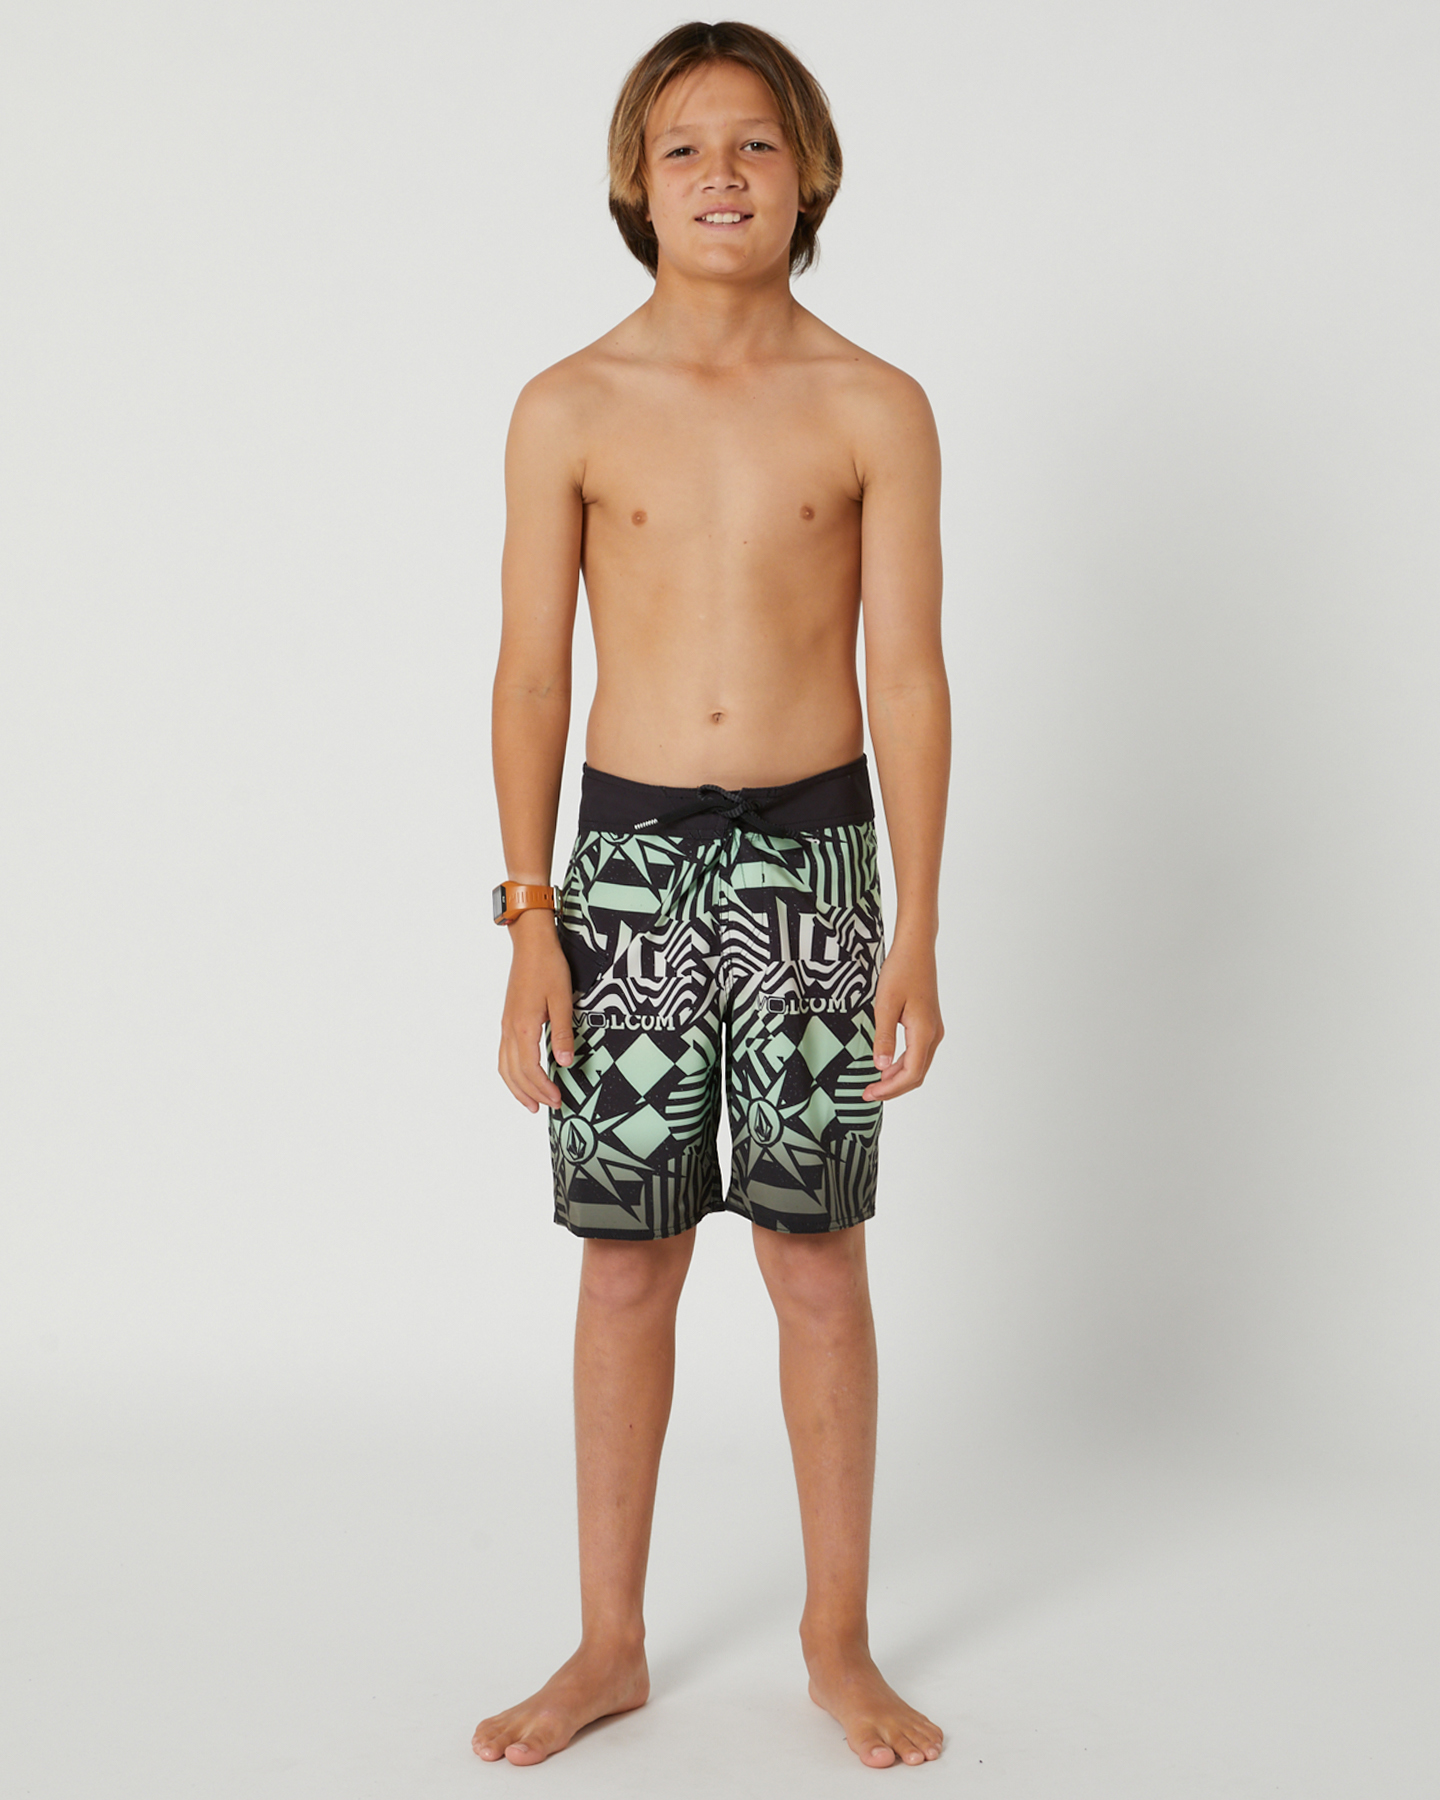 Volcom Mod Ringer Boardshort - Teens - Seaweed Green | SurfStitch